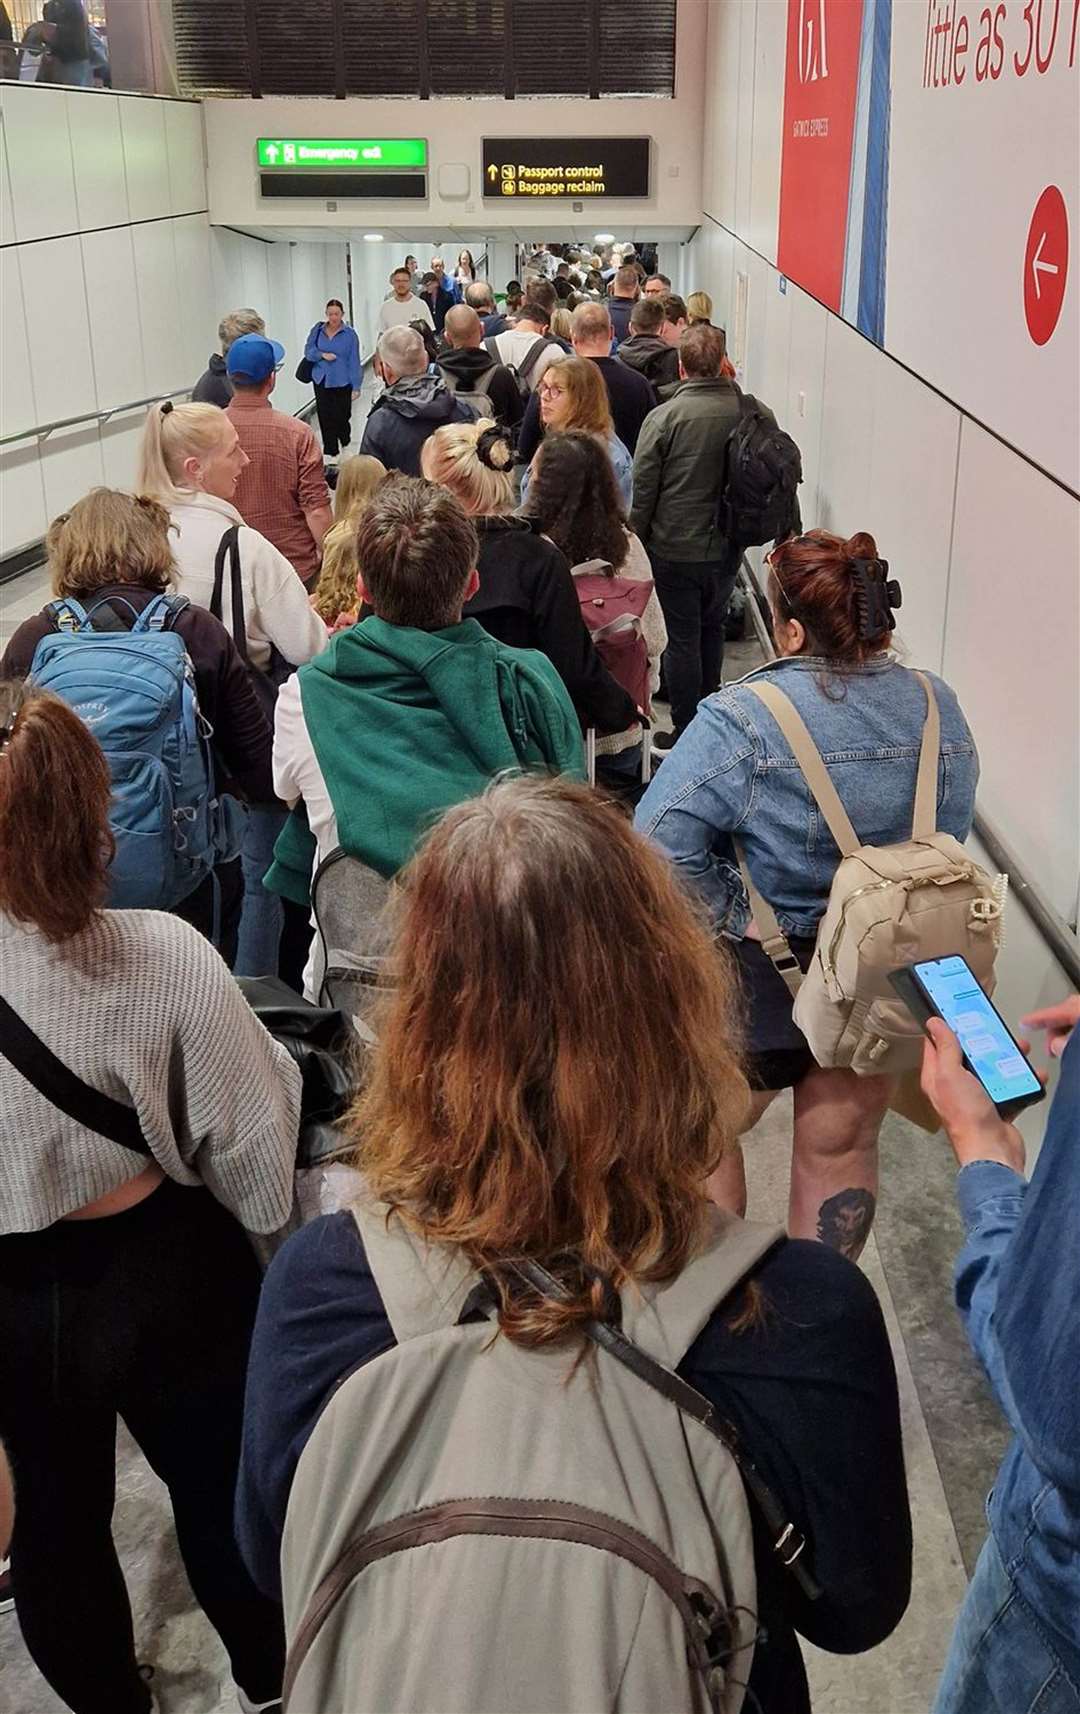 Passengers faced long queues at Gatwick Airport (Paul Uwagboe/PA)